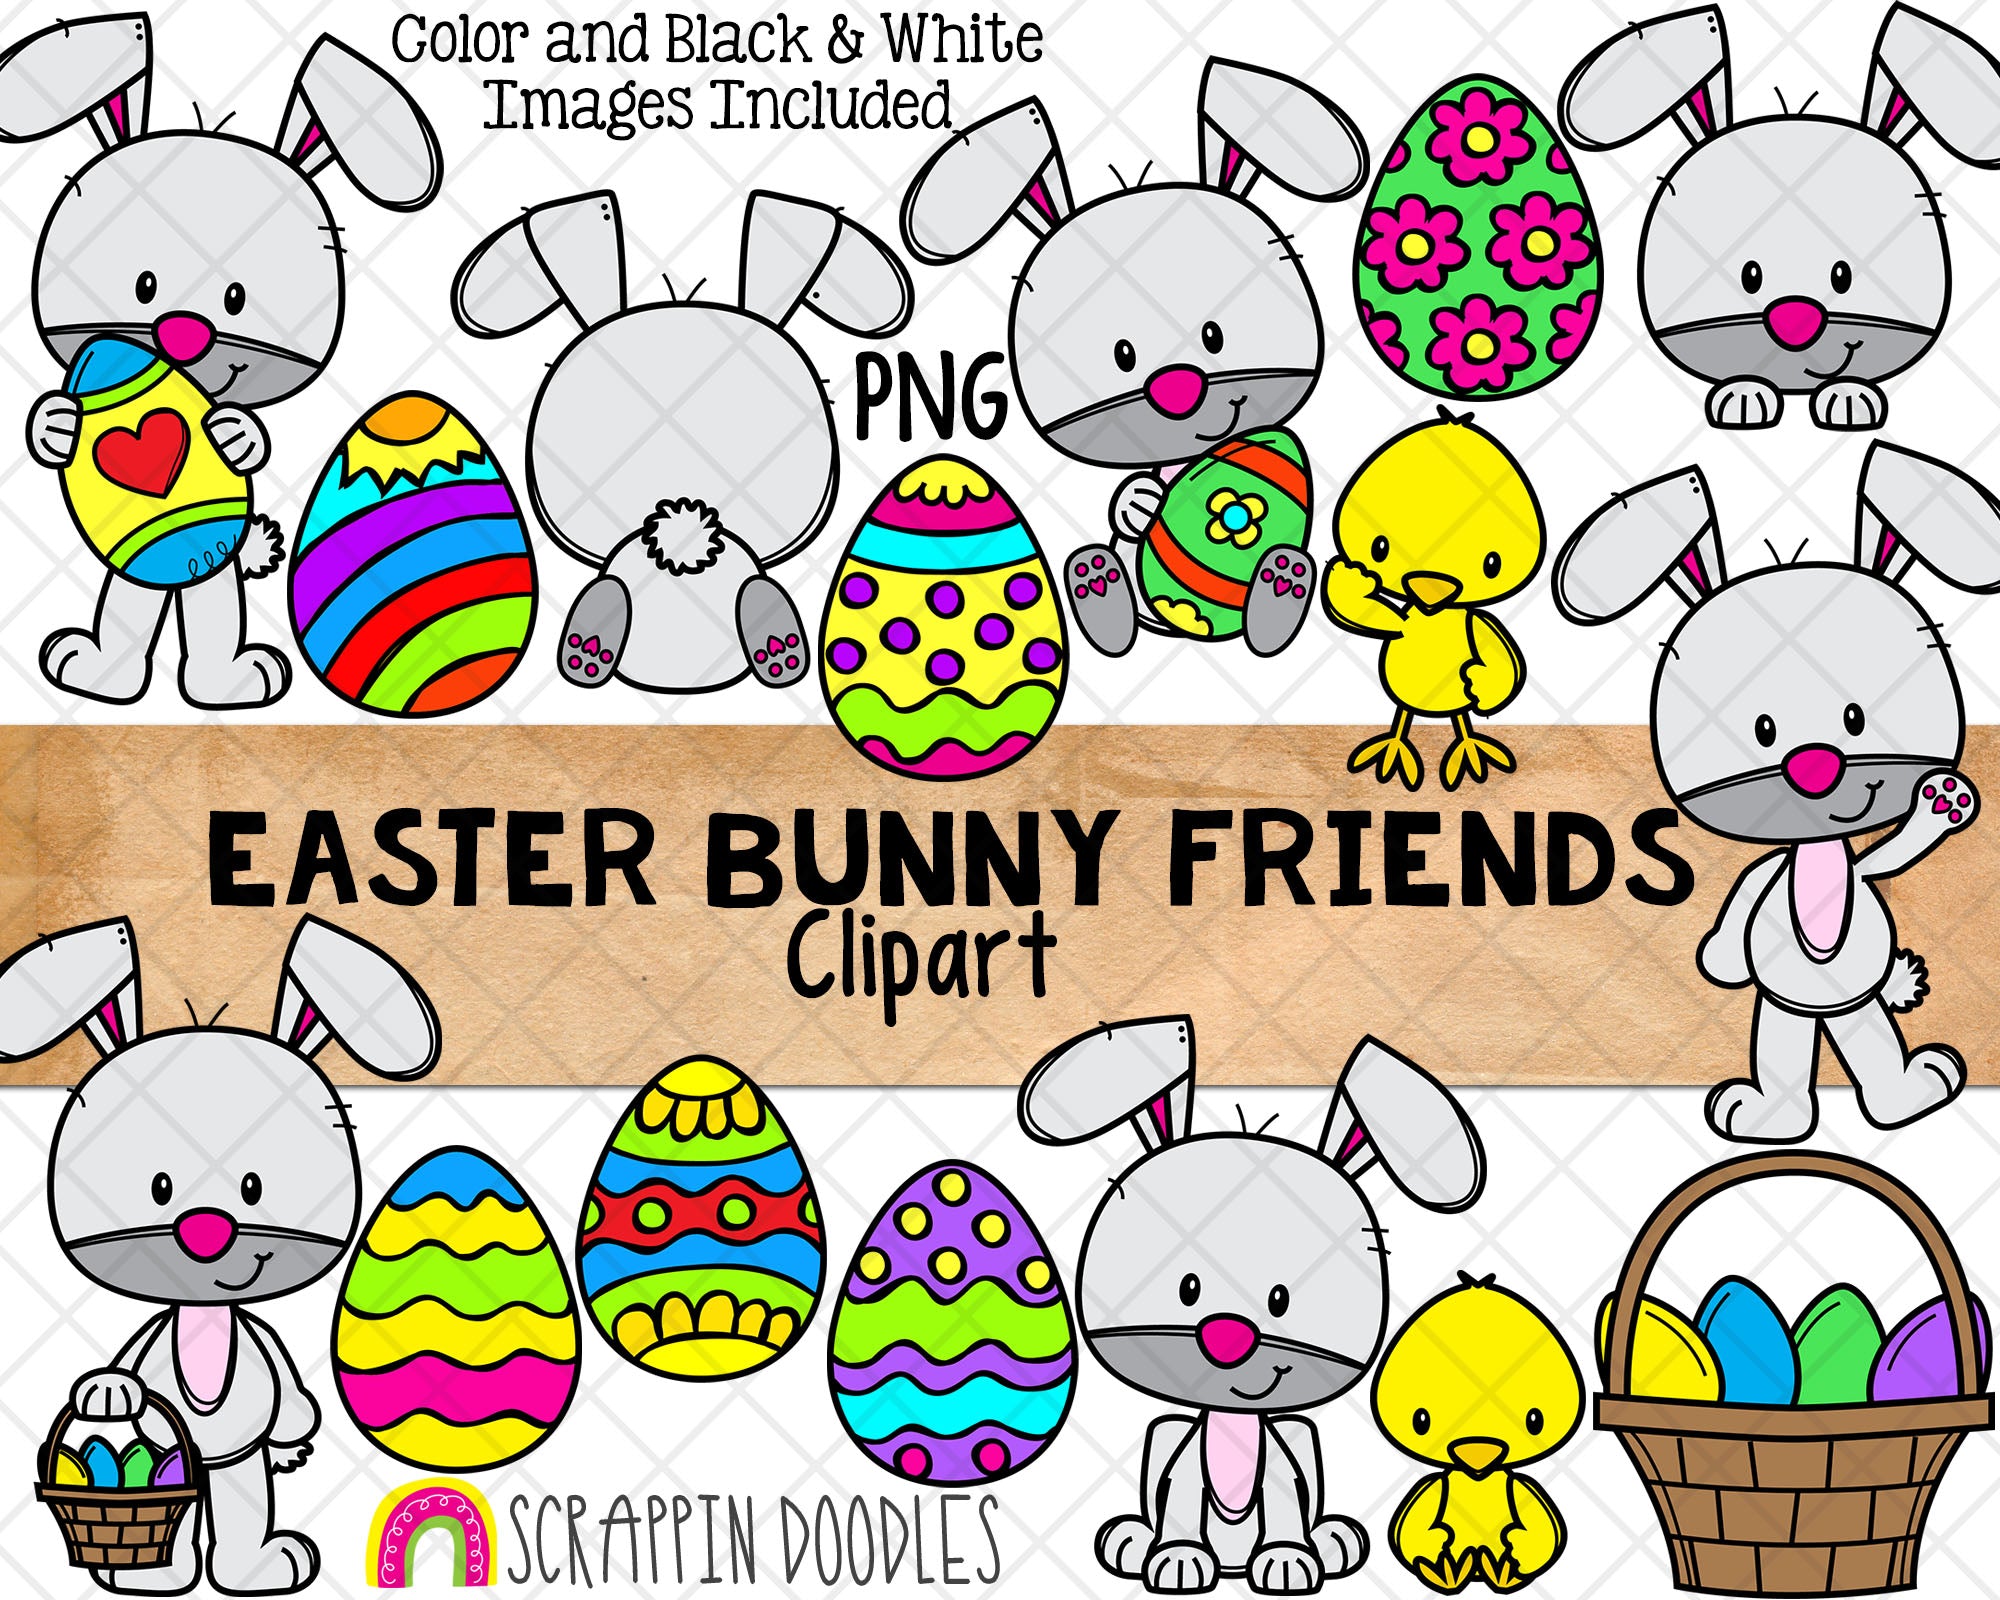 happy easter bunny clip art